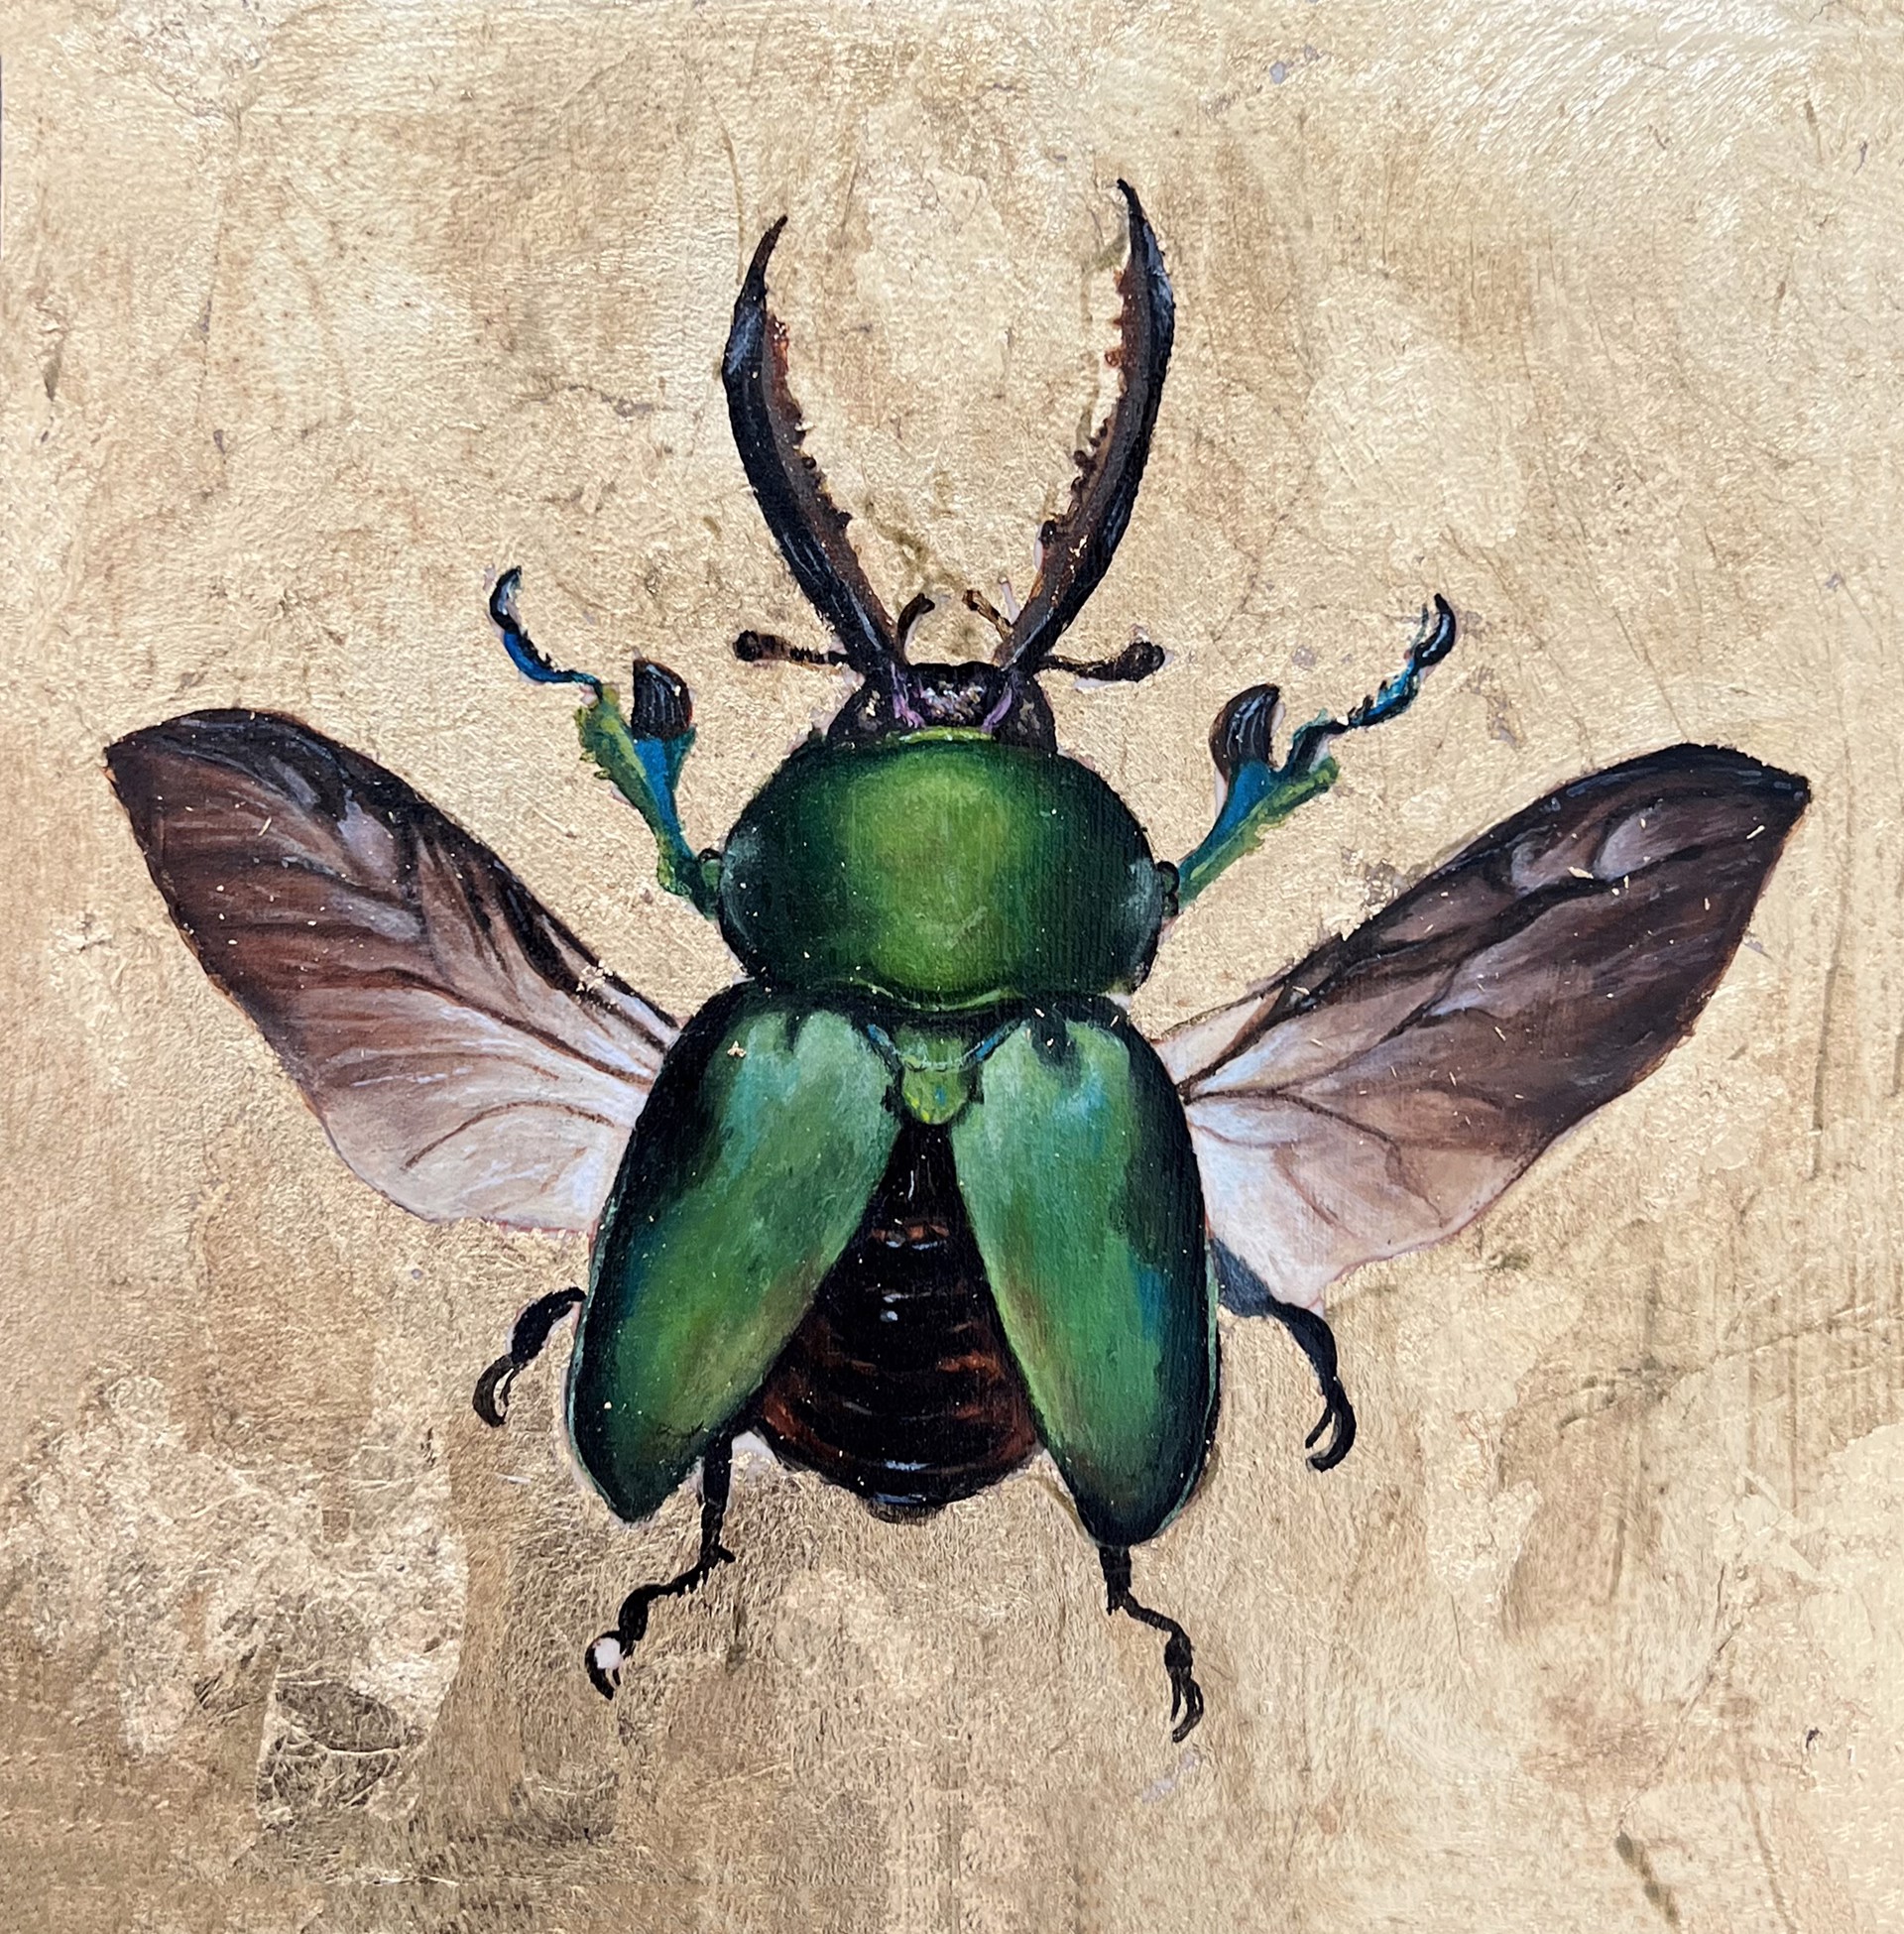 Beetle by Megan Buccere